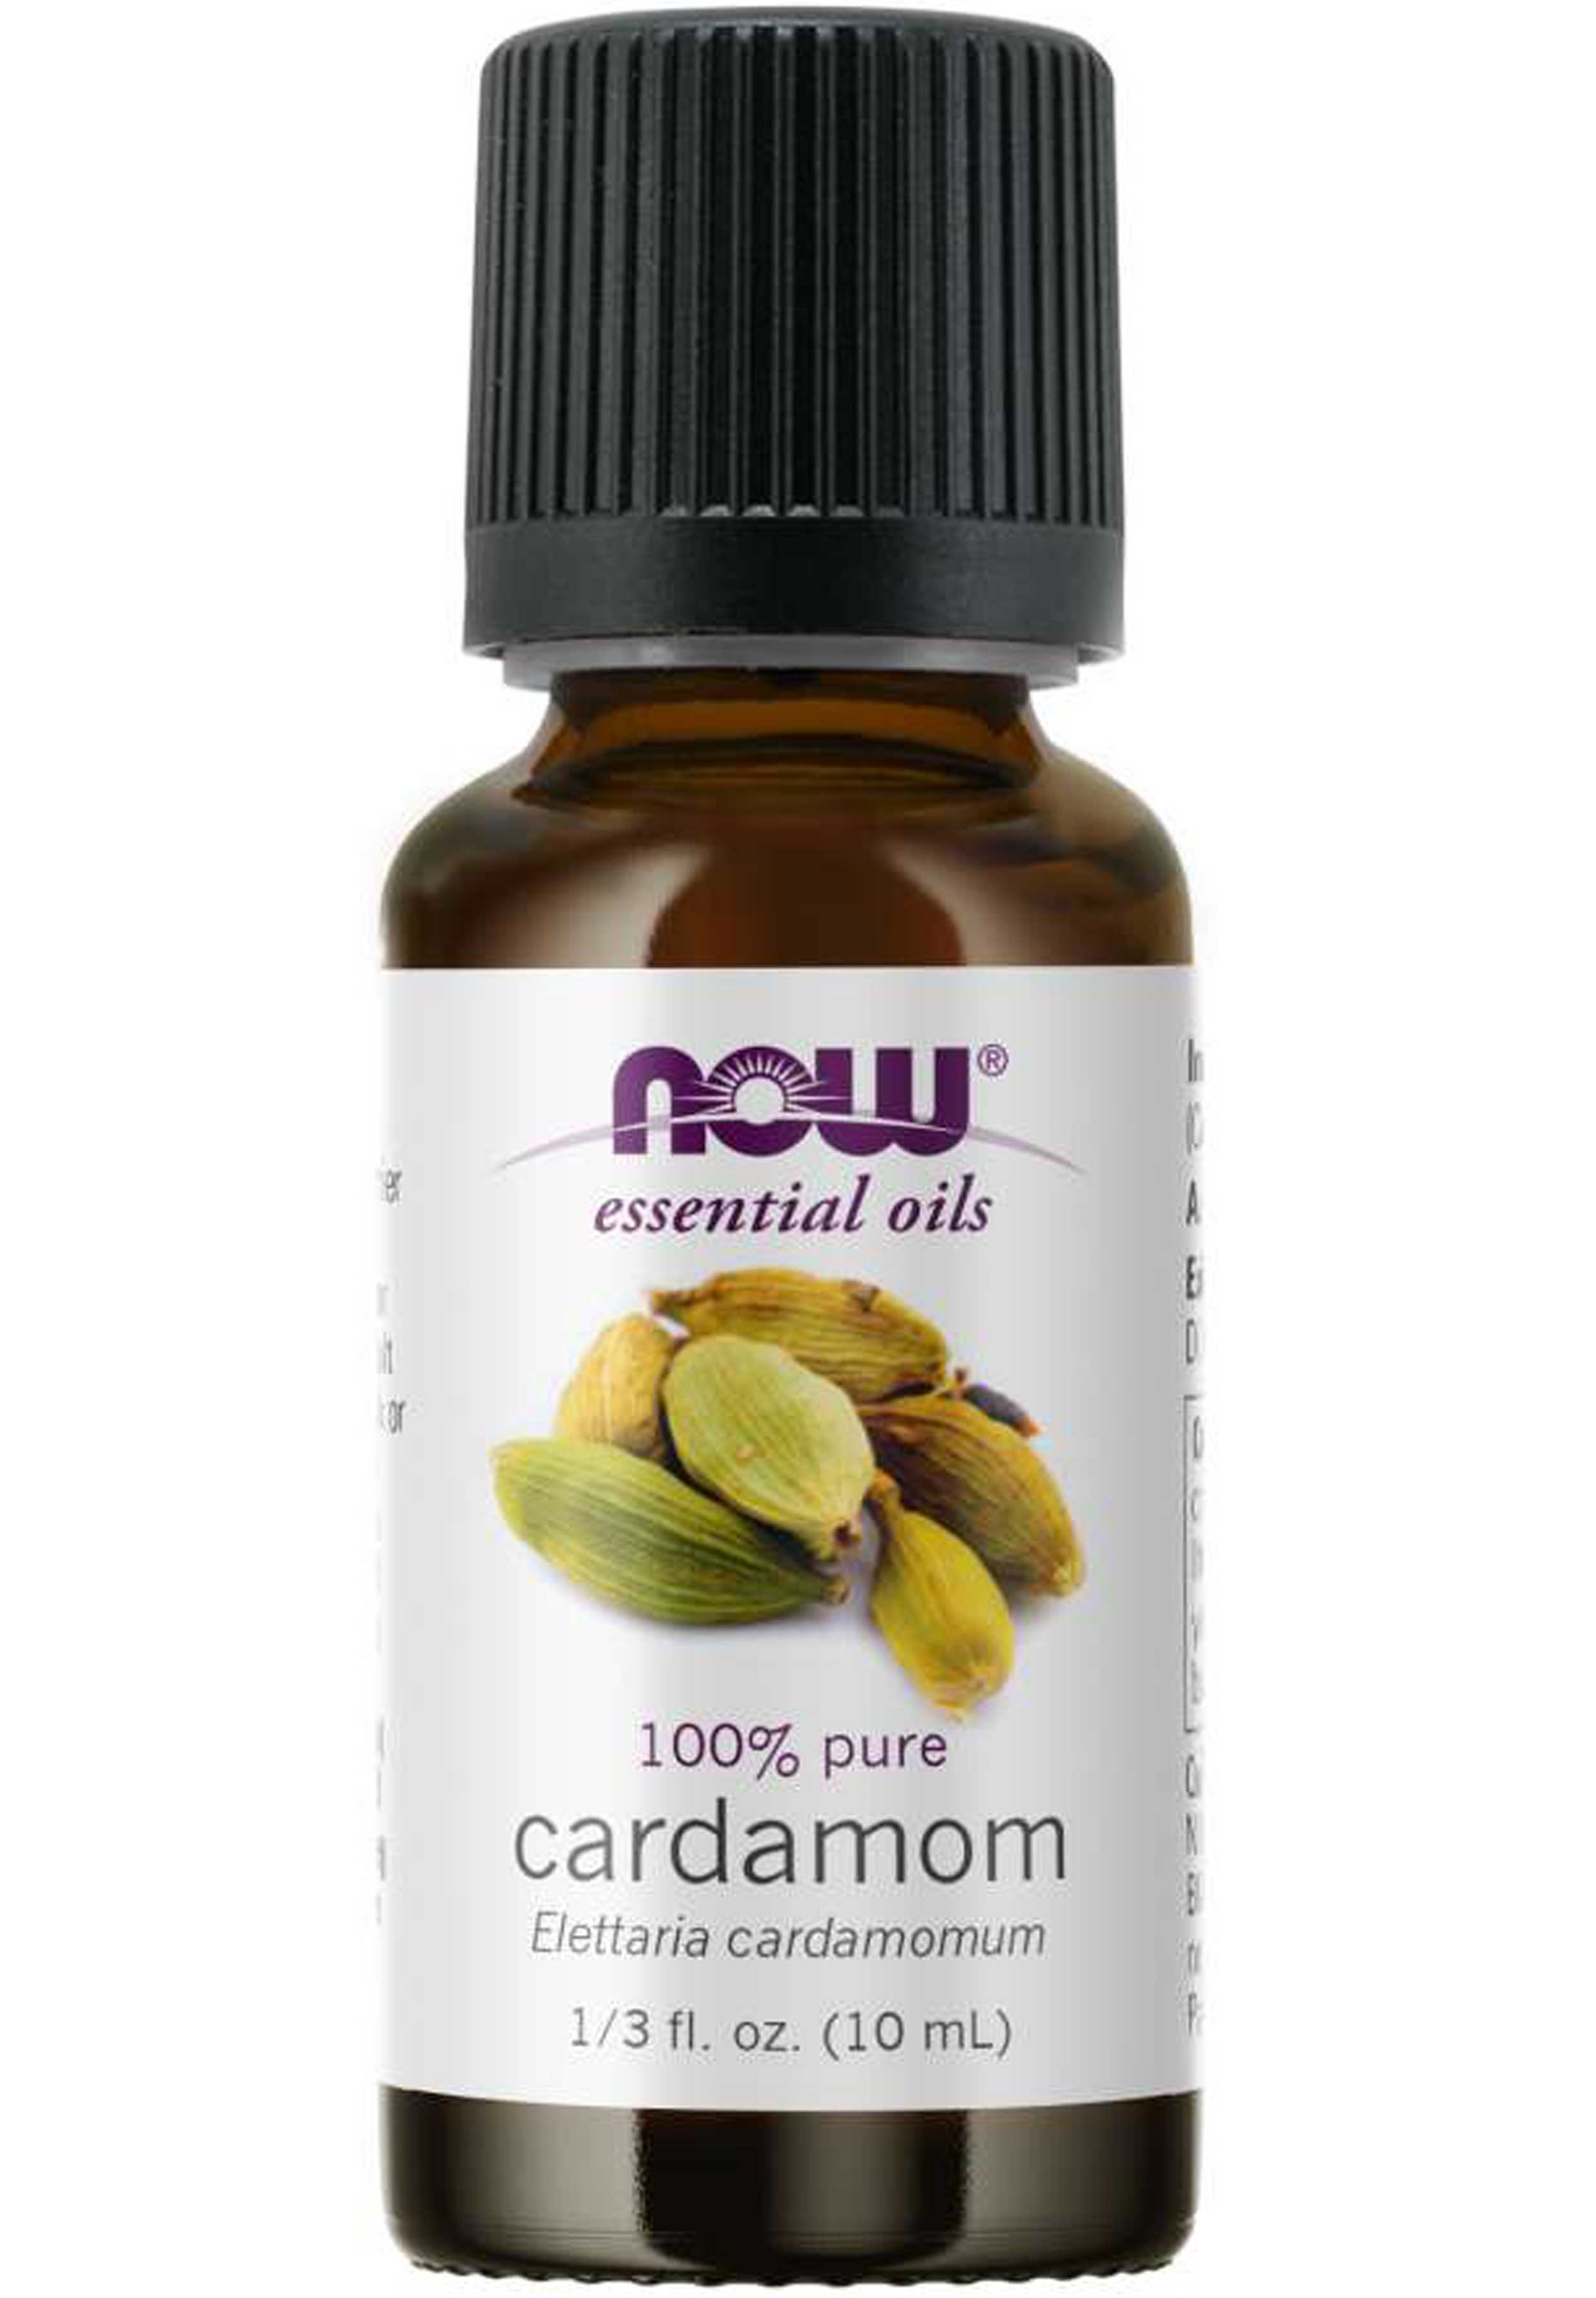 NOW Essential Oils Cardamom Oil